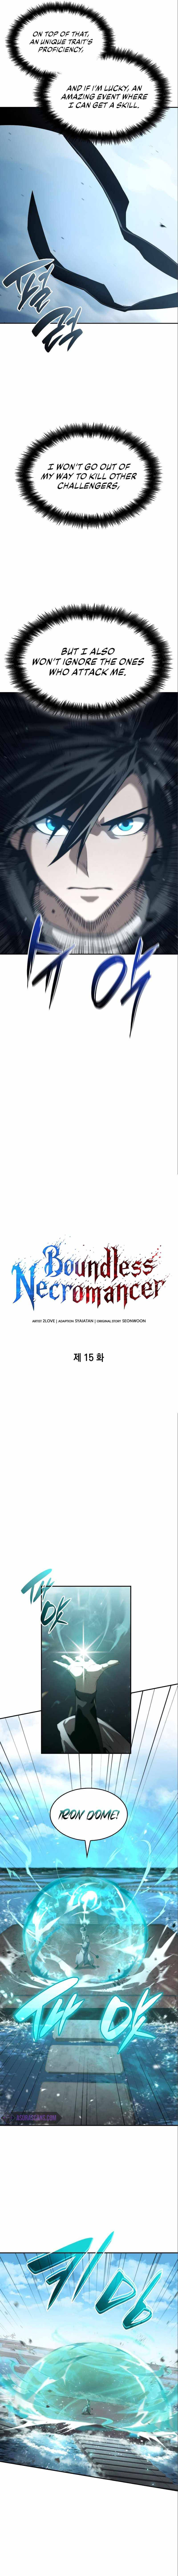 boundless-necromancer-chapter-15-4